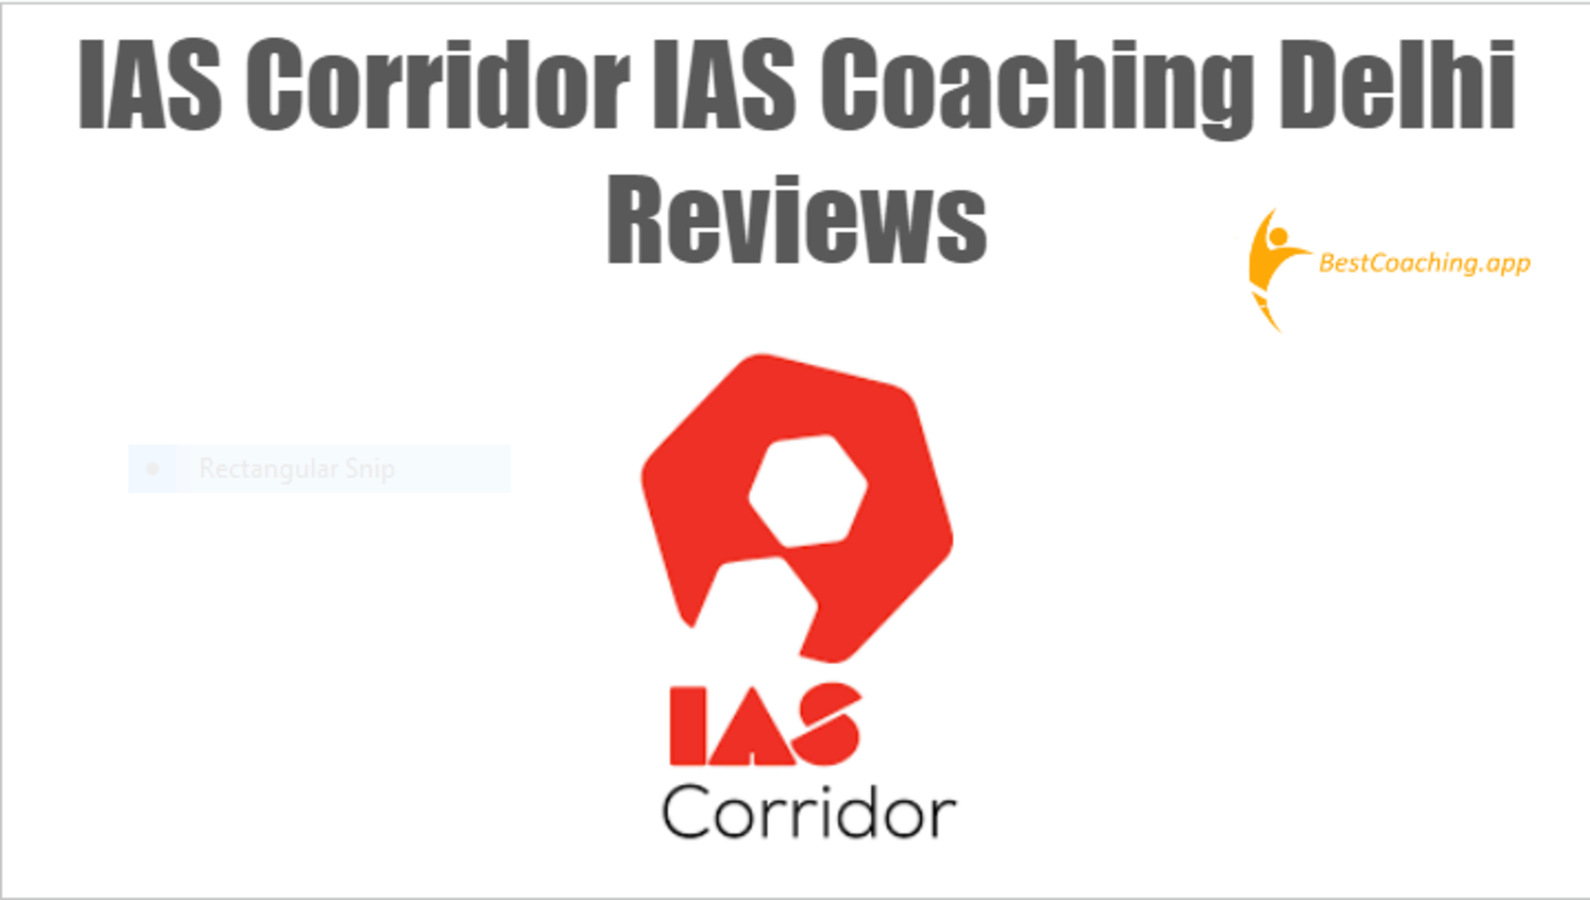 IAS Corridor IAS Coaching Delhi Reviews